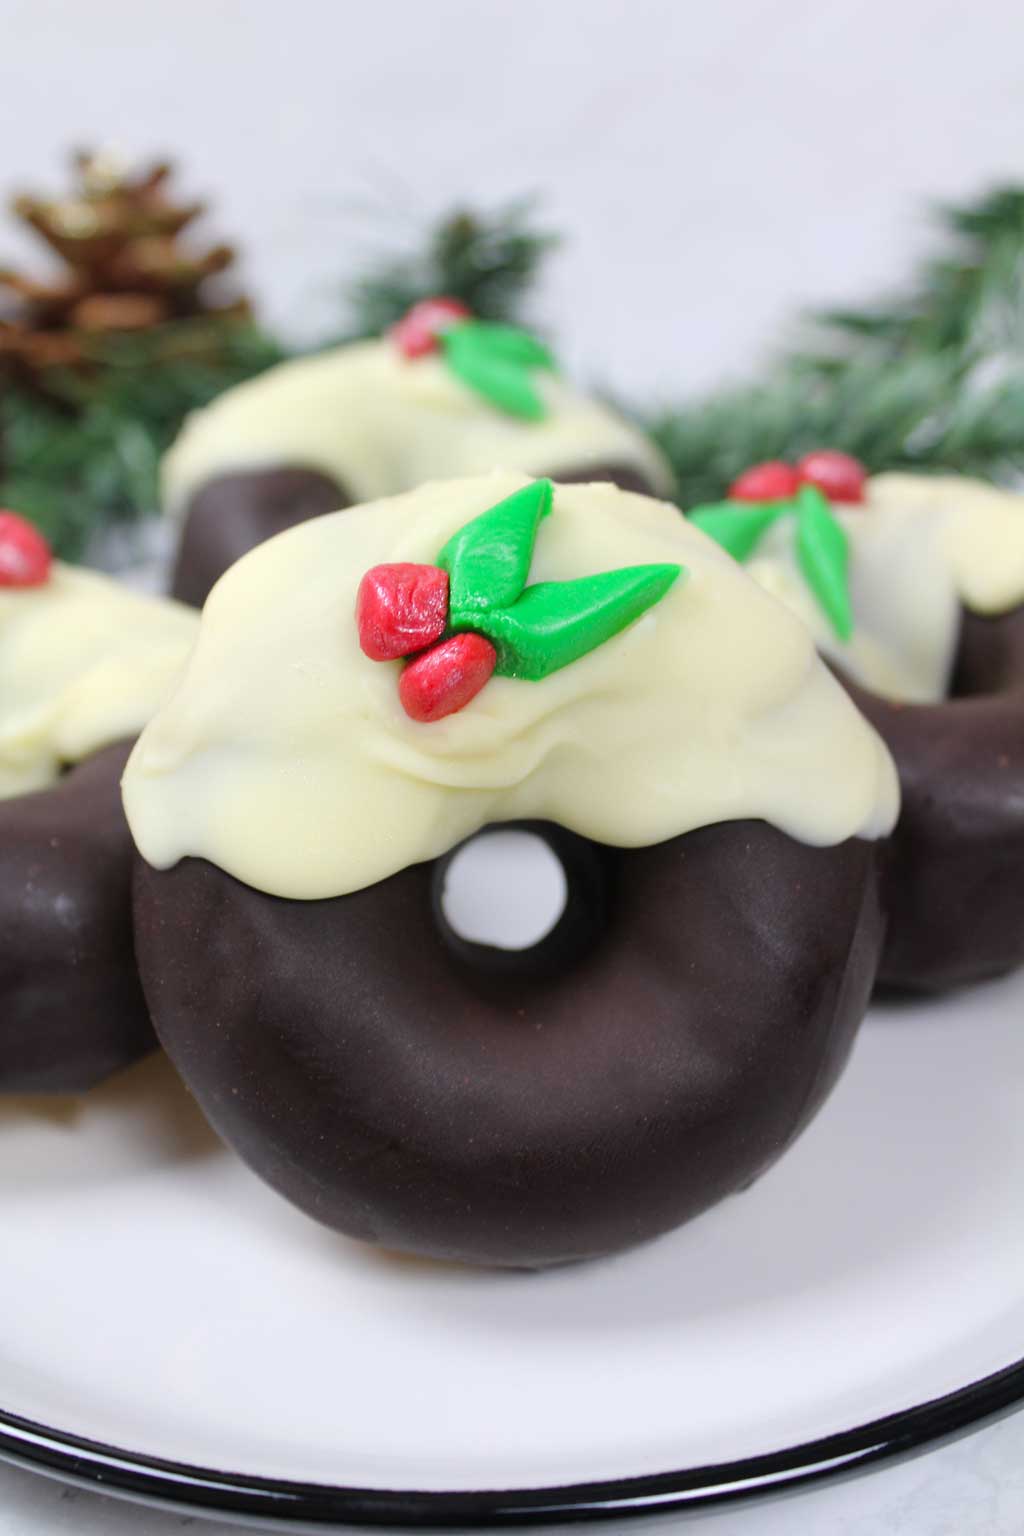 Vegan Christmas pudding donuts on a plate